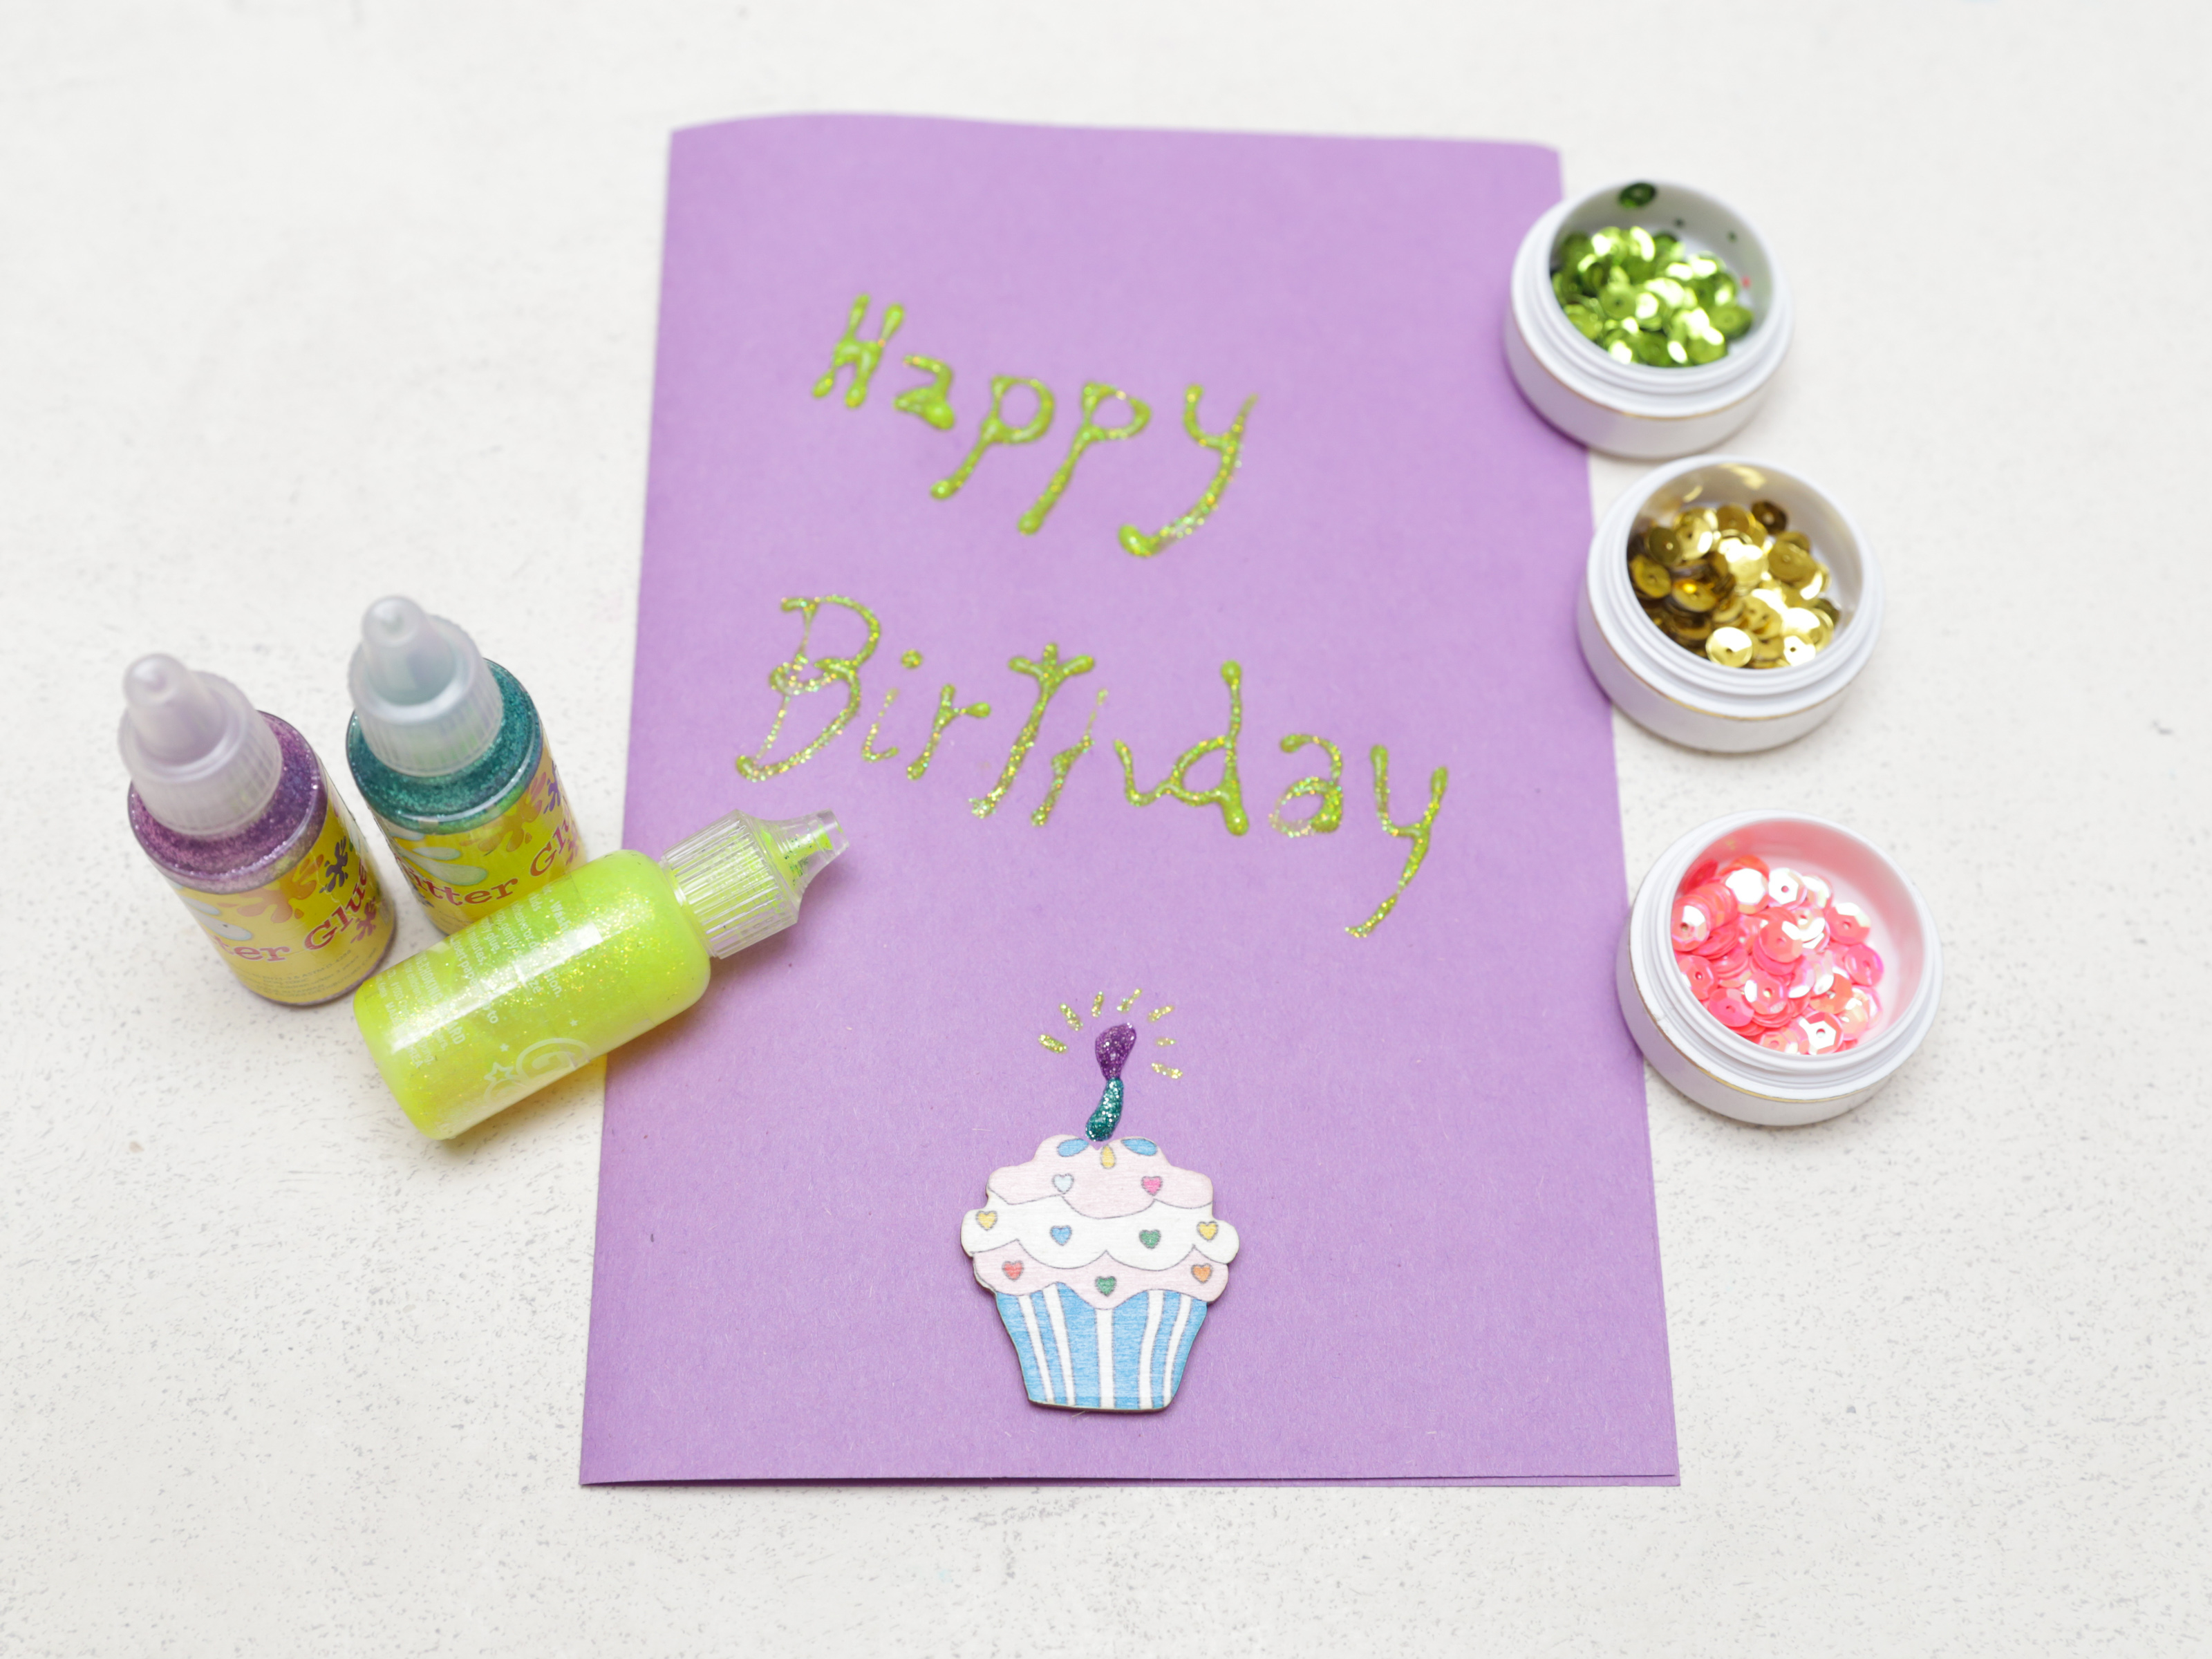 Homemade Birthday Card Idea How To Make A Simple Handmade Birthday Card 15 Steps